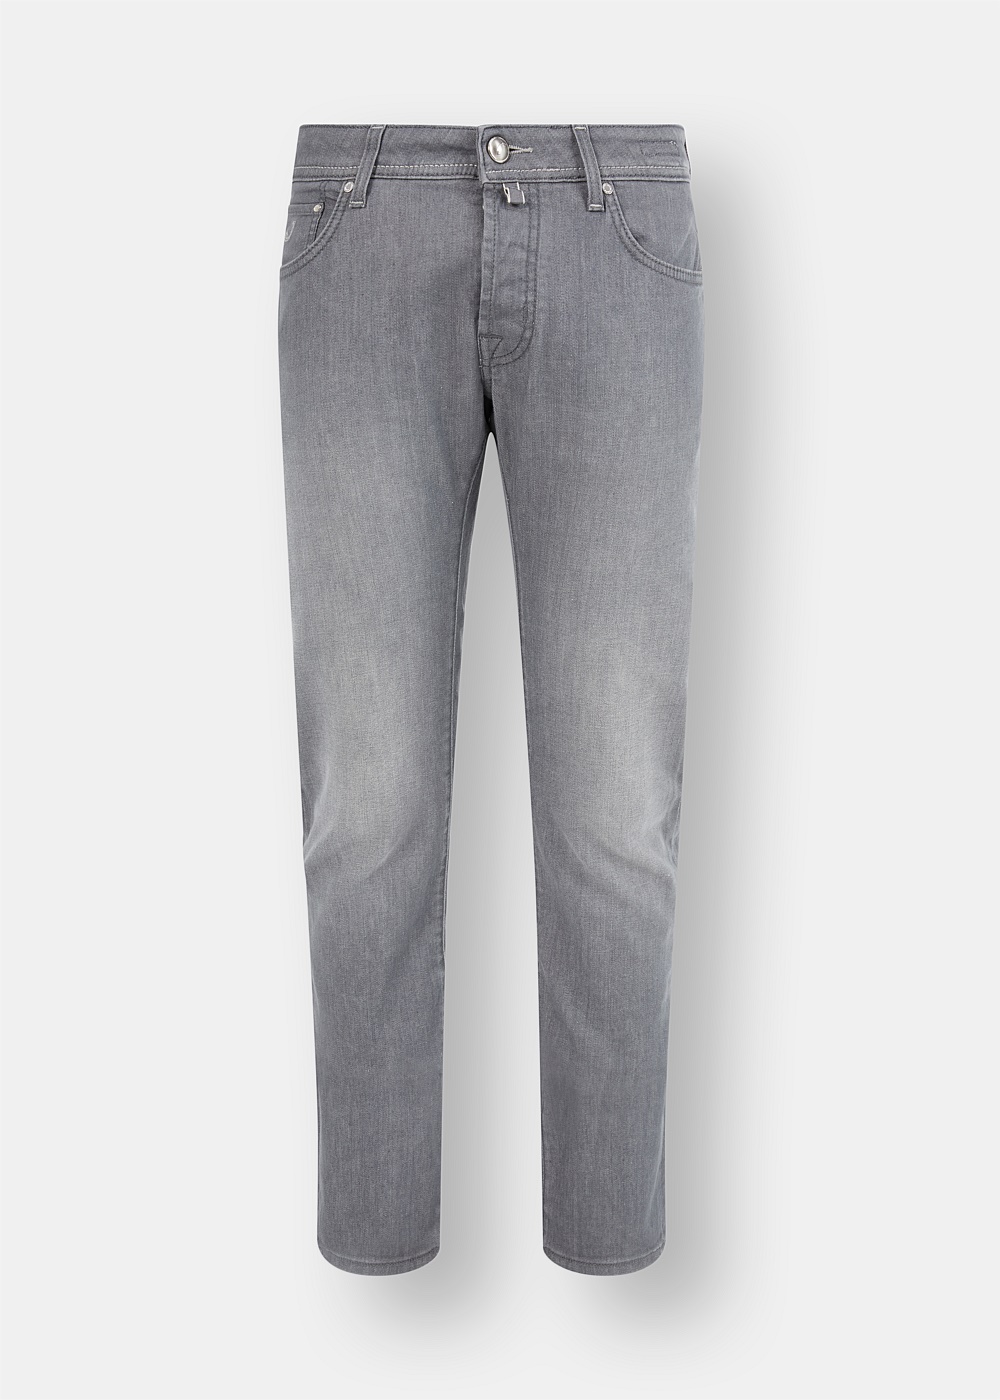 Shop Jacob Cohen J622 Japanese Grey Denim Jeans | Harrolds Australia